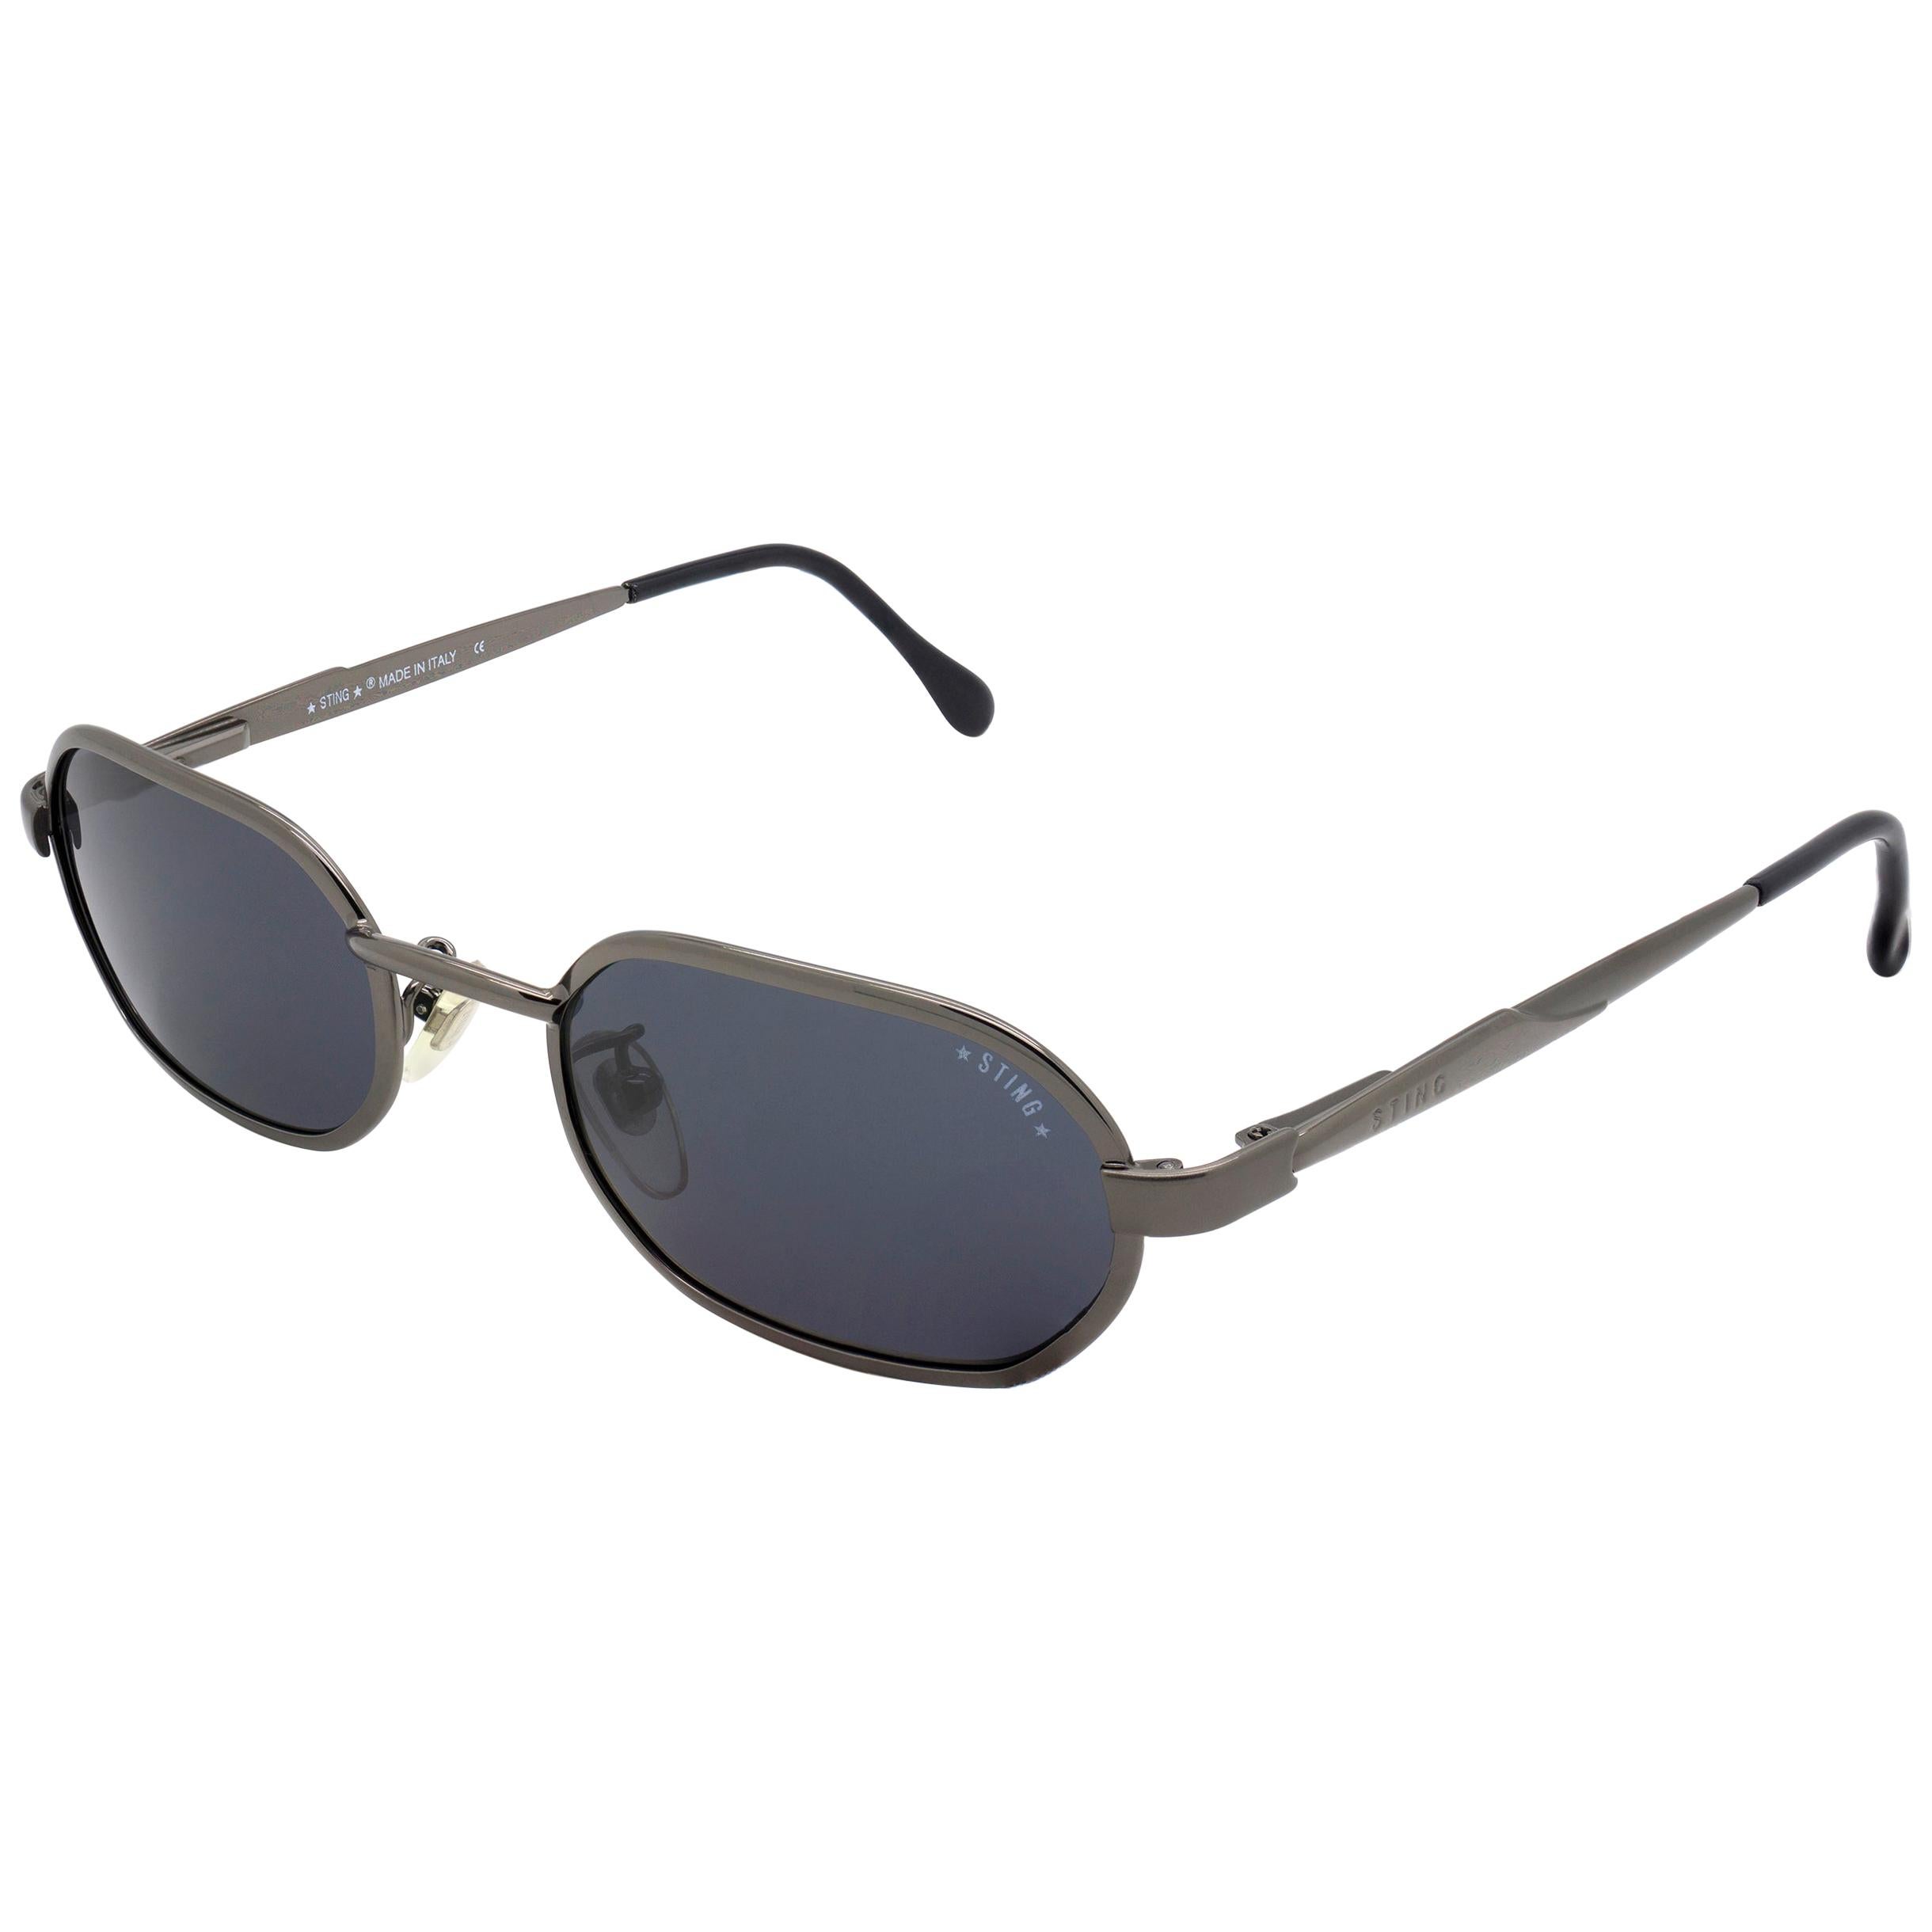 Sting hexagonal vintage sunglasses spring hinges For Sale